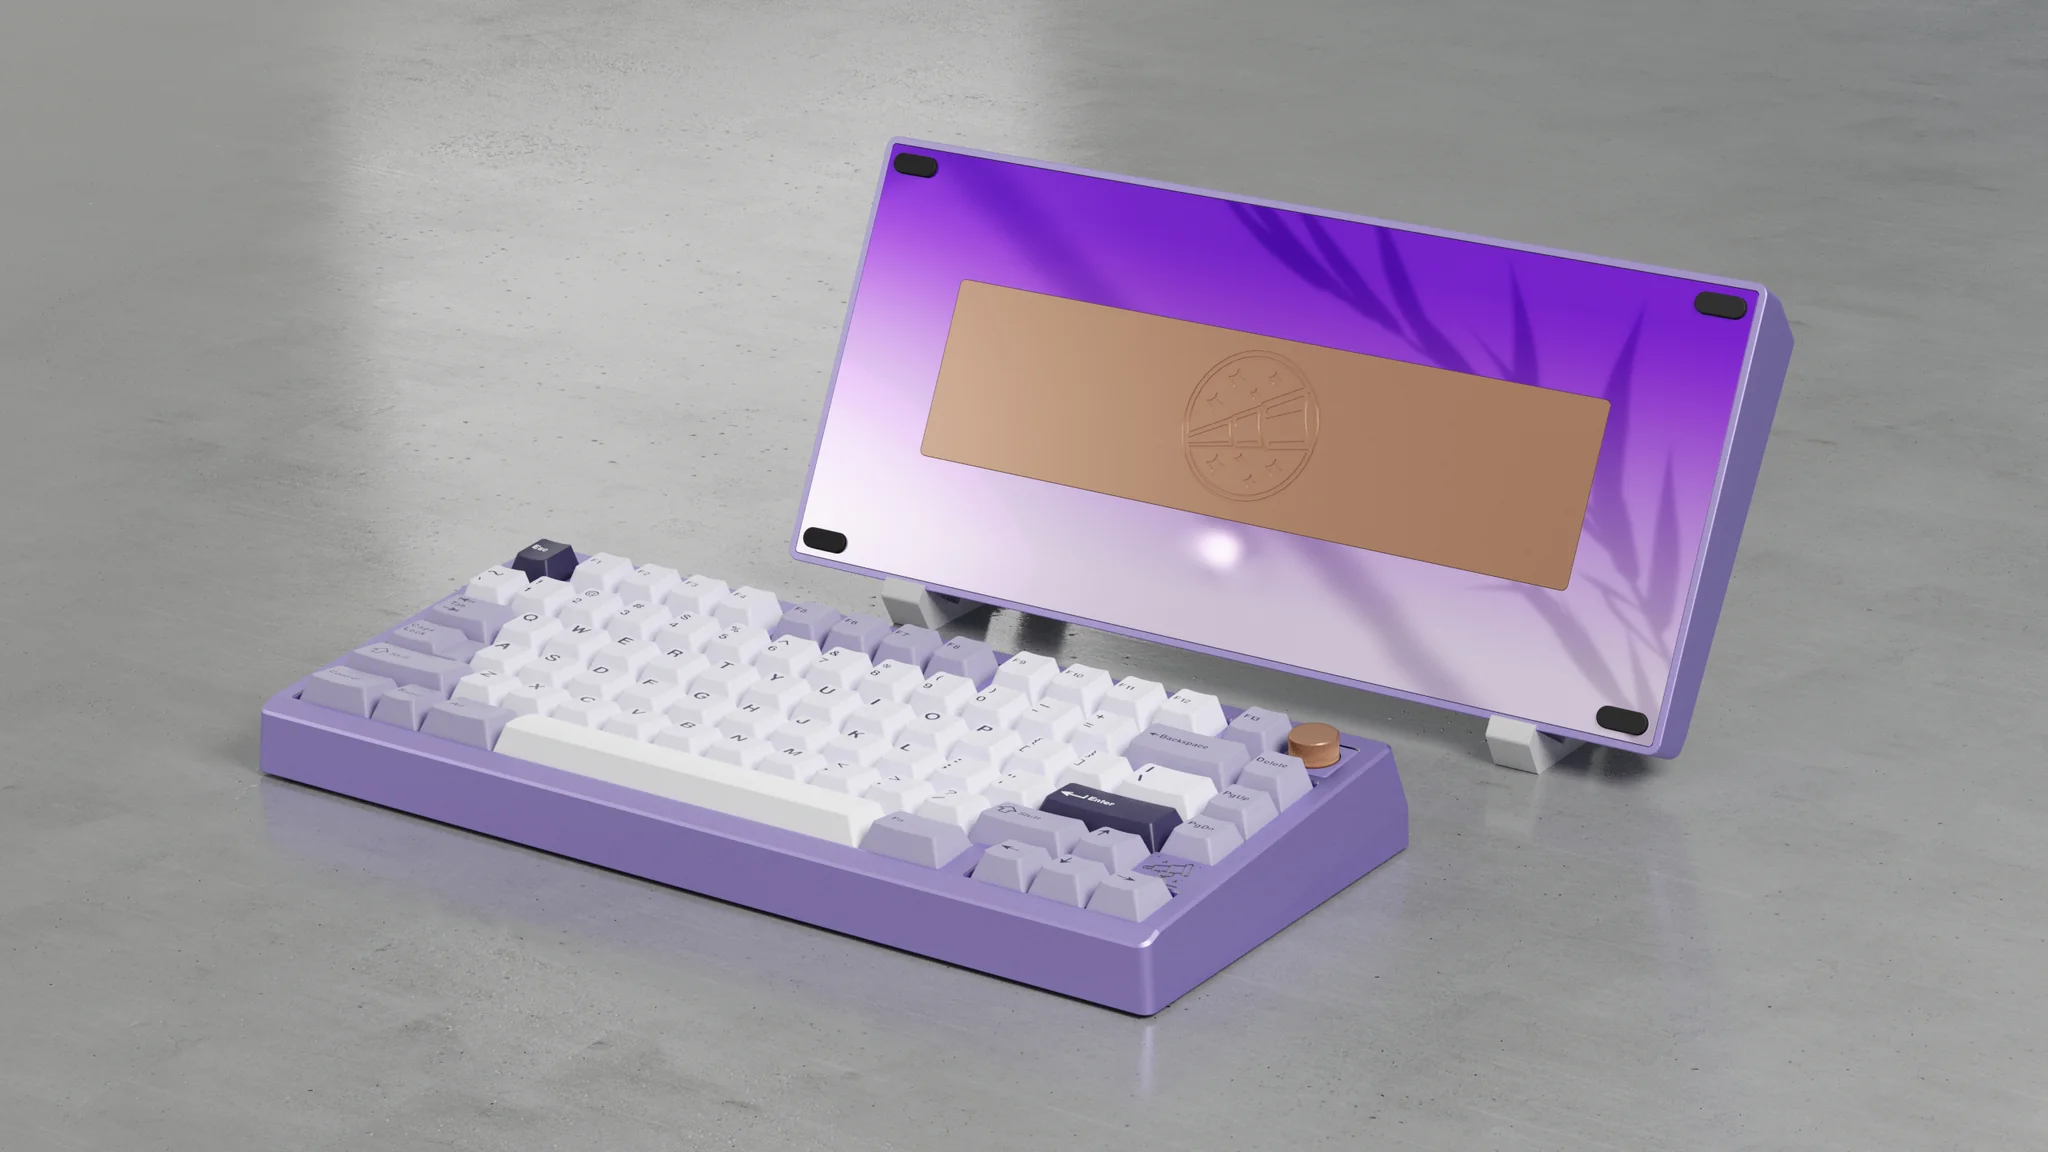 [Group-Buy] Meletrix Zoom75 Special Edition (SE) - Barebones Keyboard Kit - Anodized Lavender